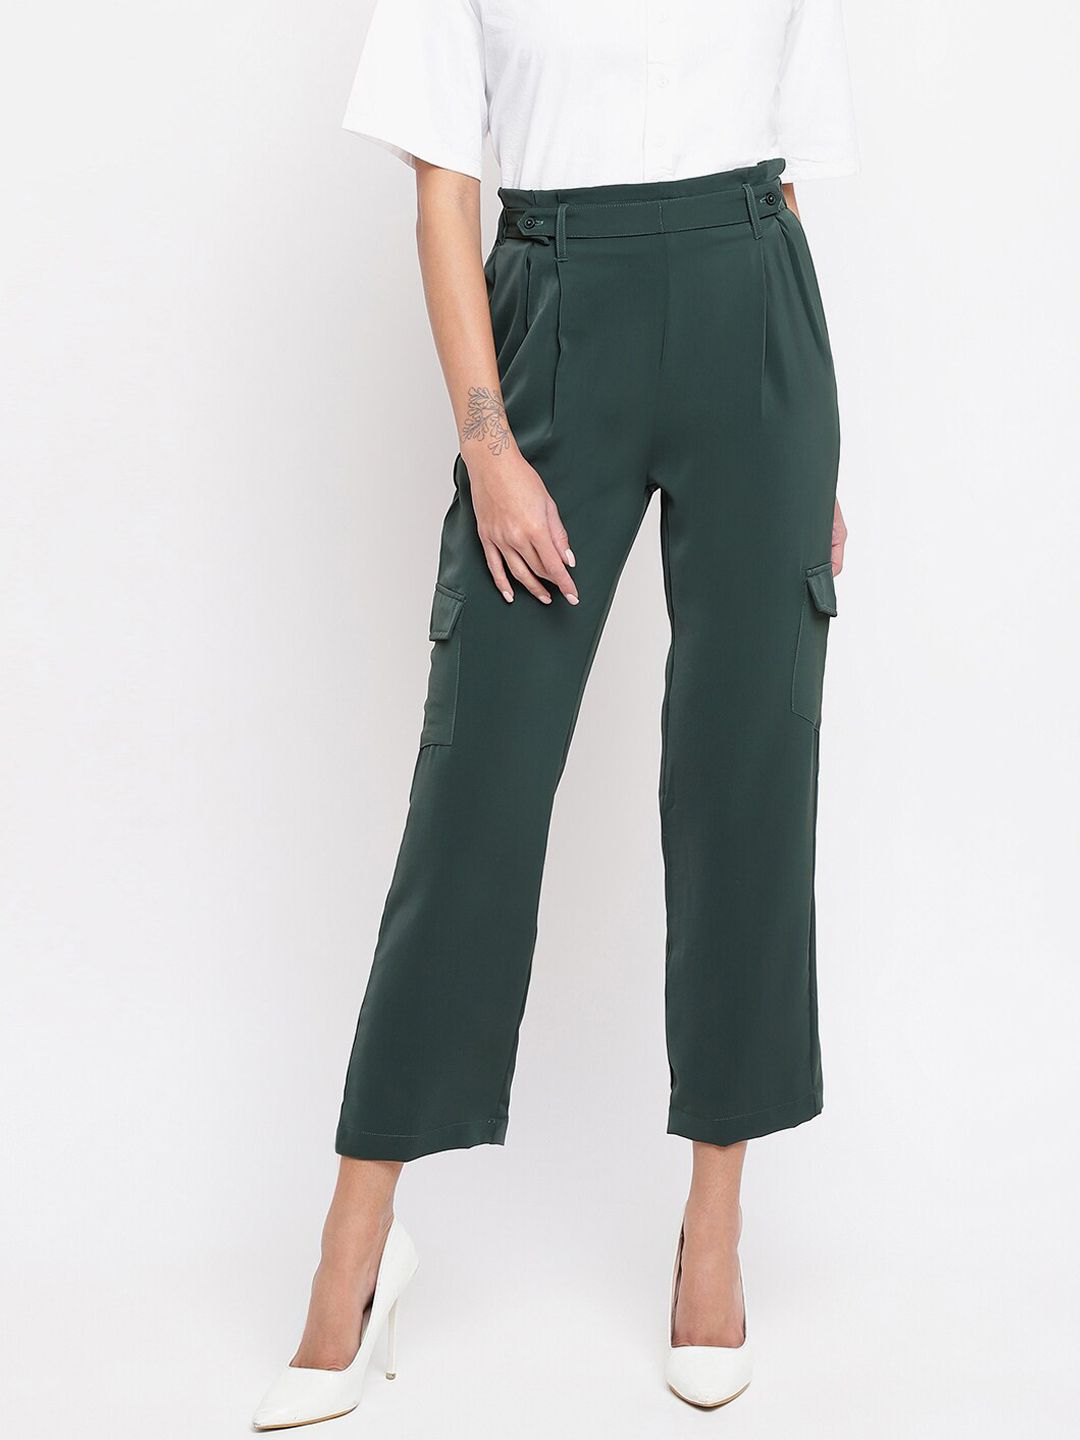 Latin Quarters Women Green Cargos Trousers Price in India